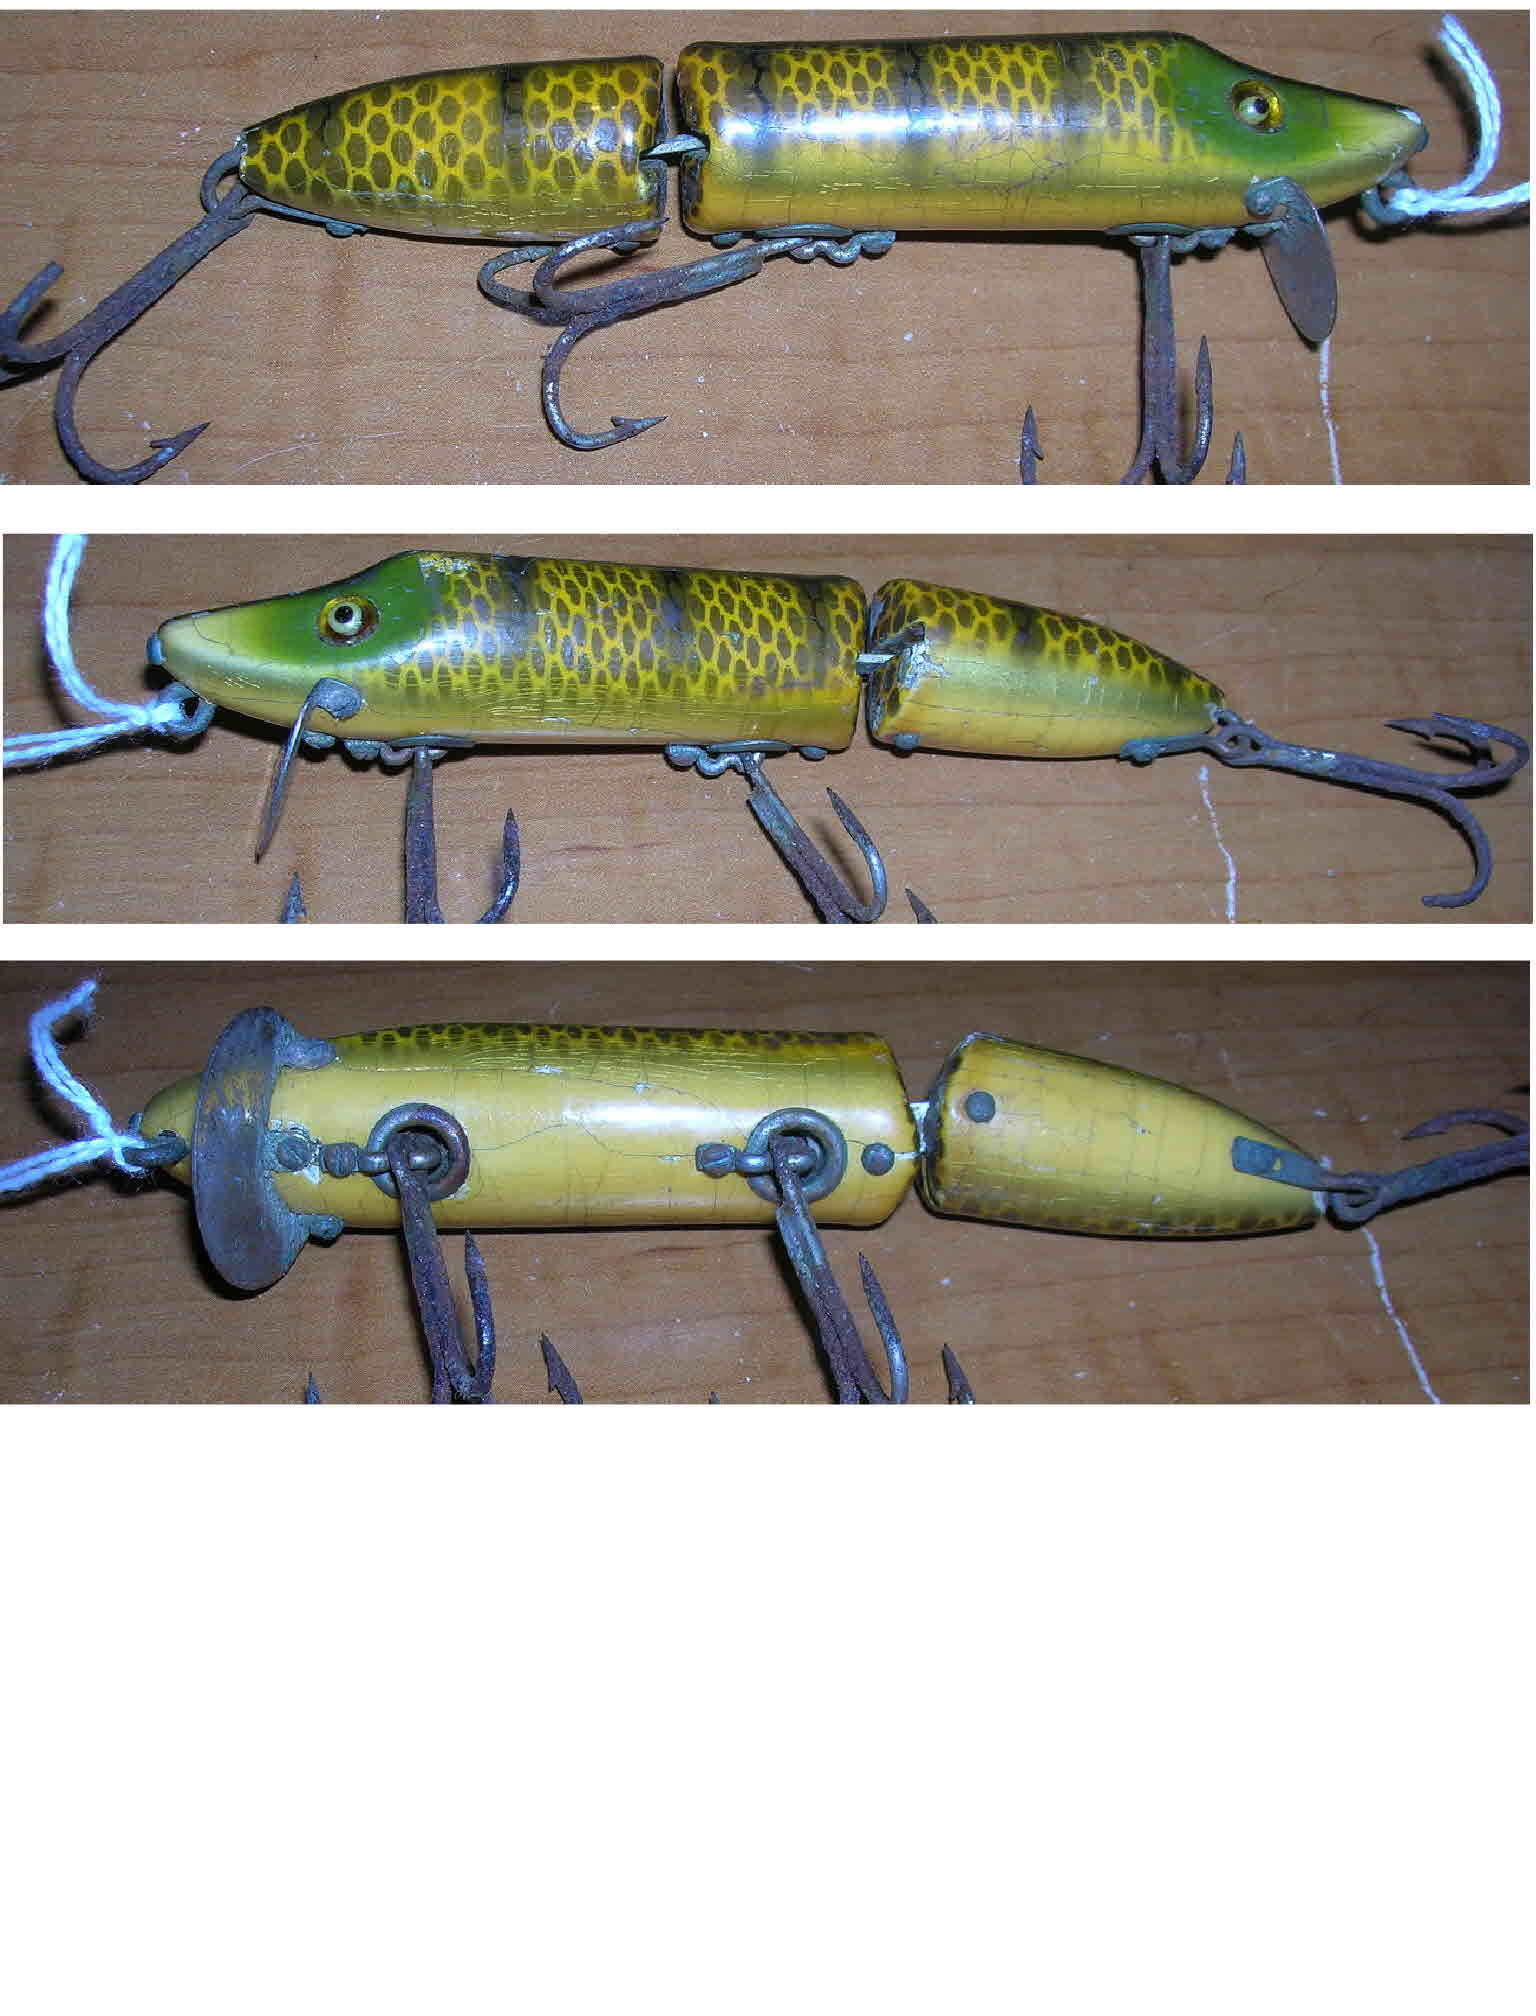 Vintage fishing lure: Heddon - Vamp Jointed